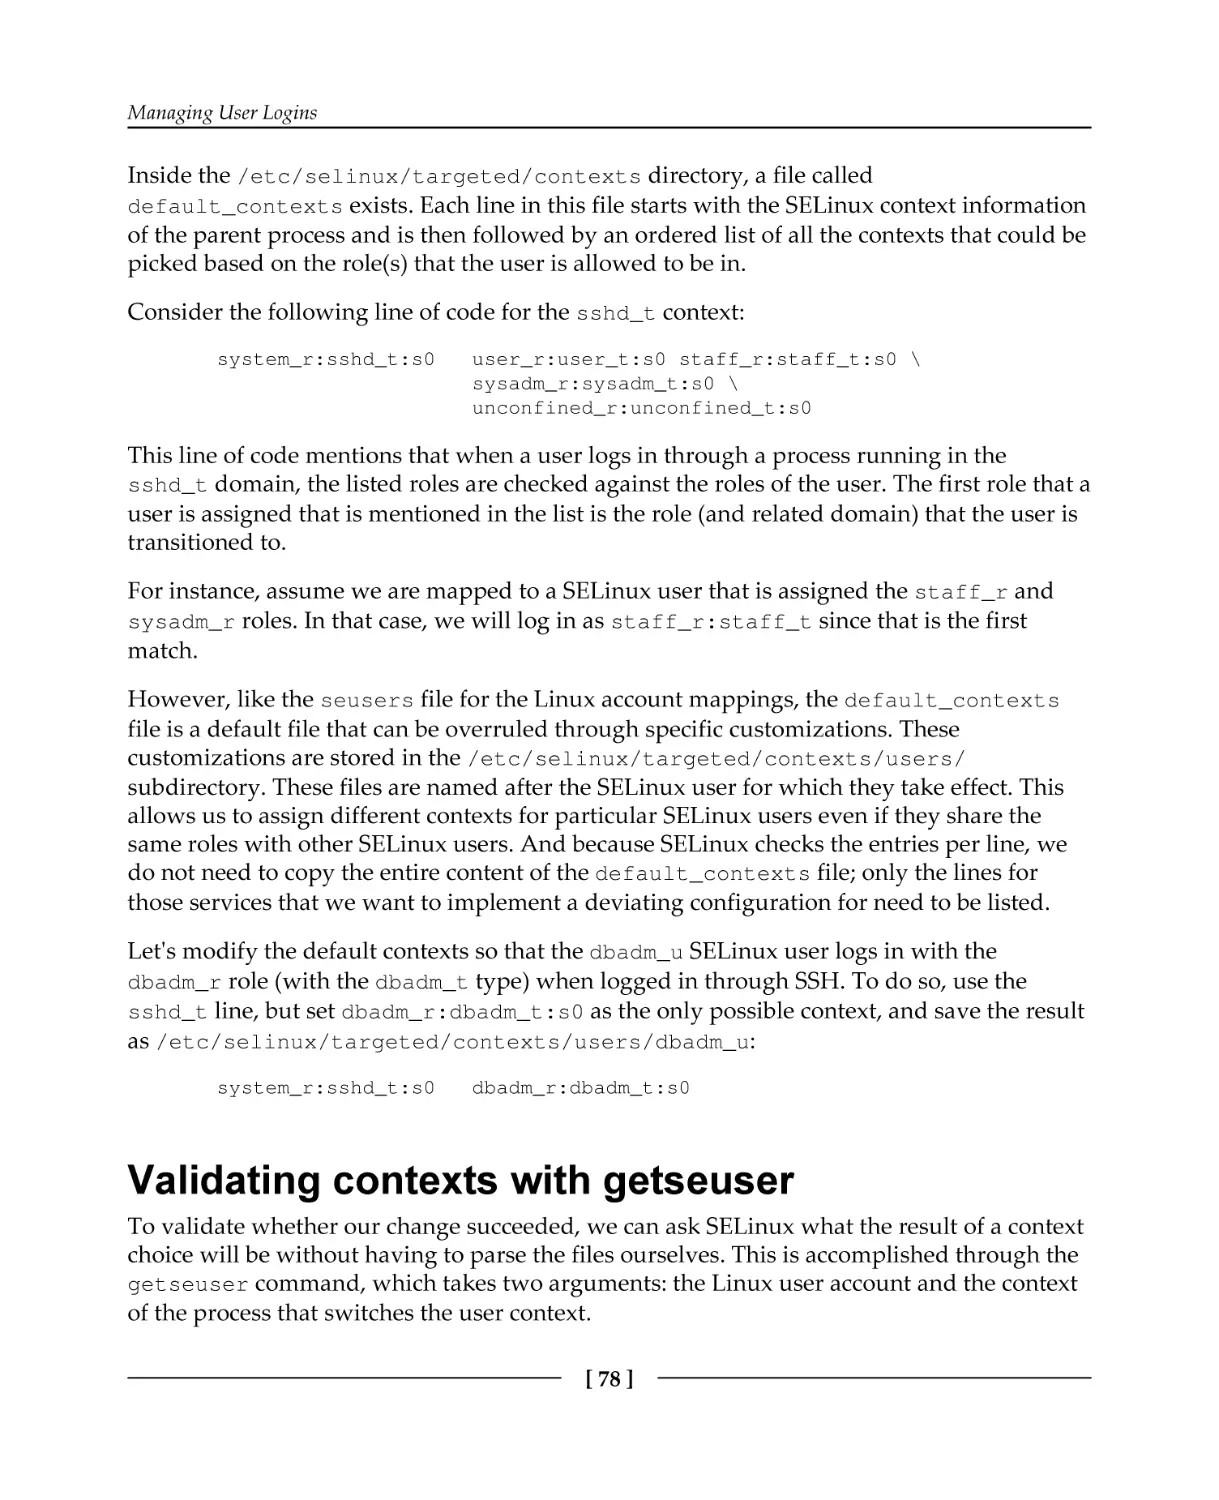 Validating contexts with getseuser